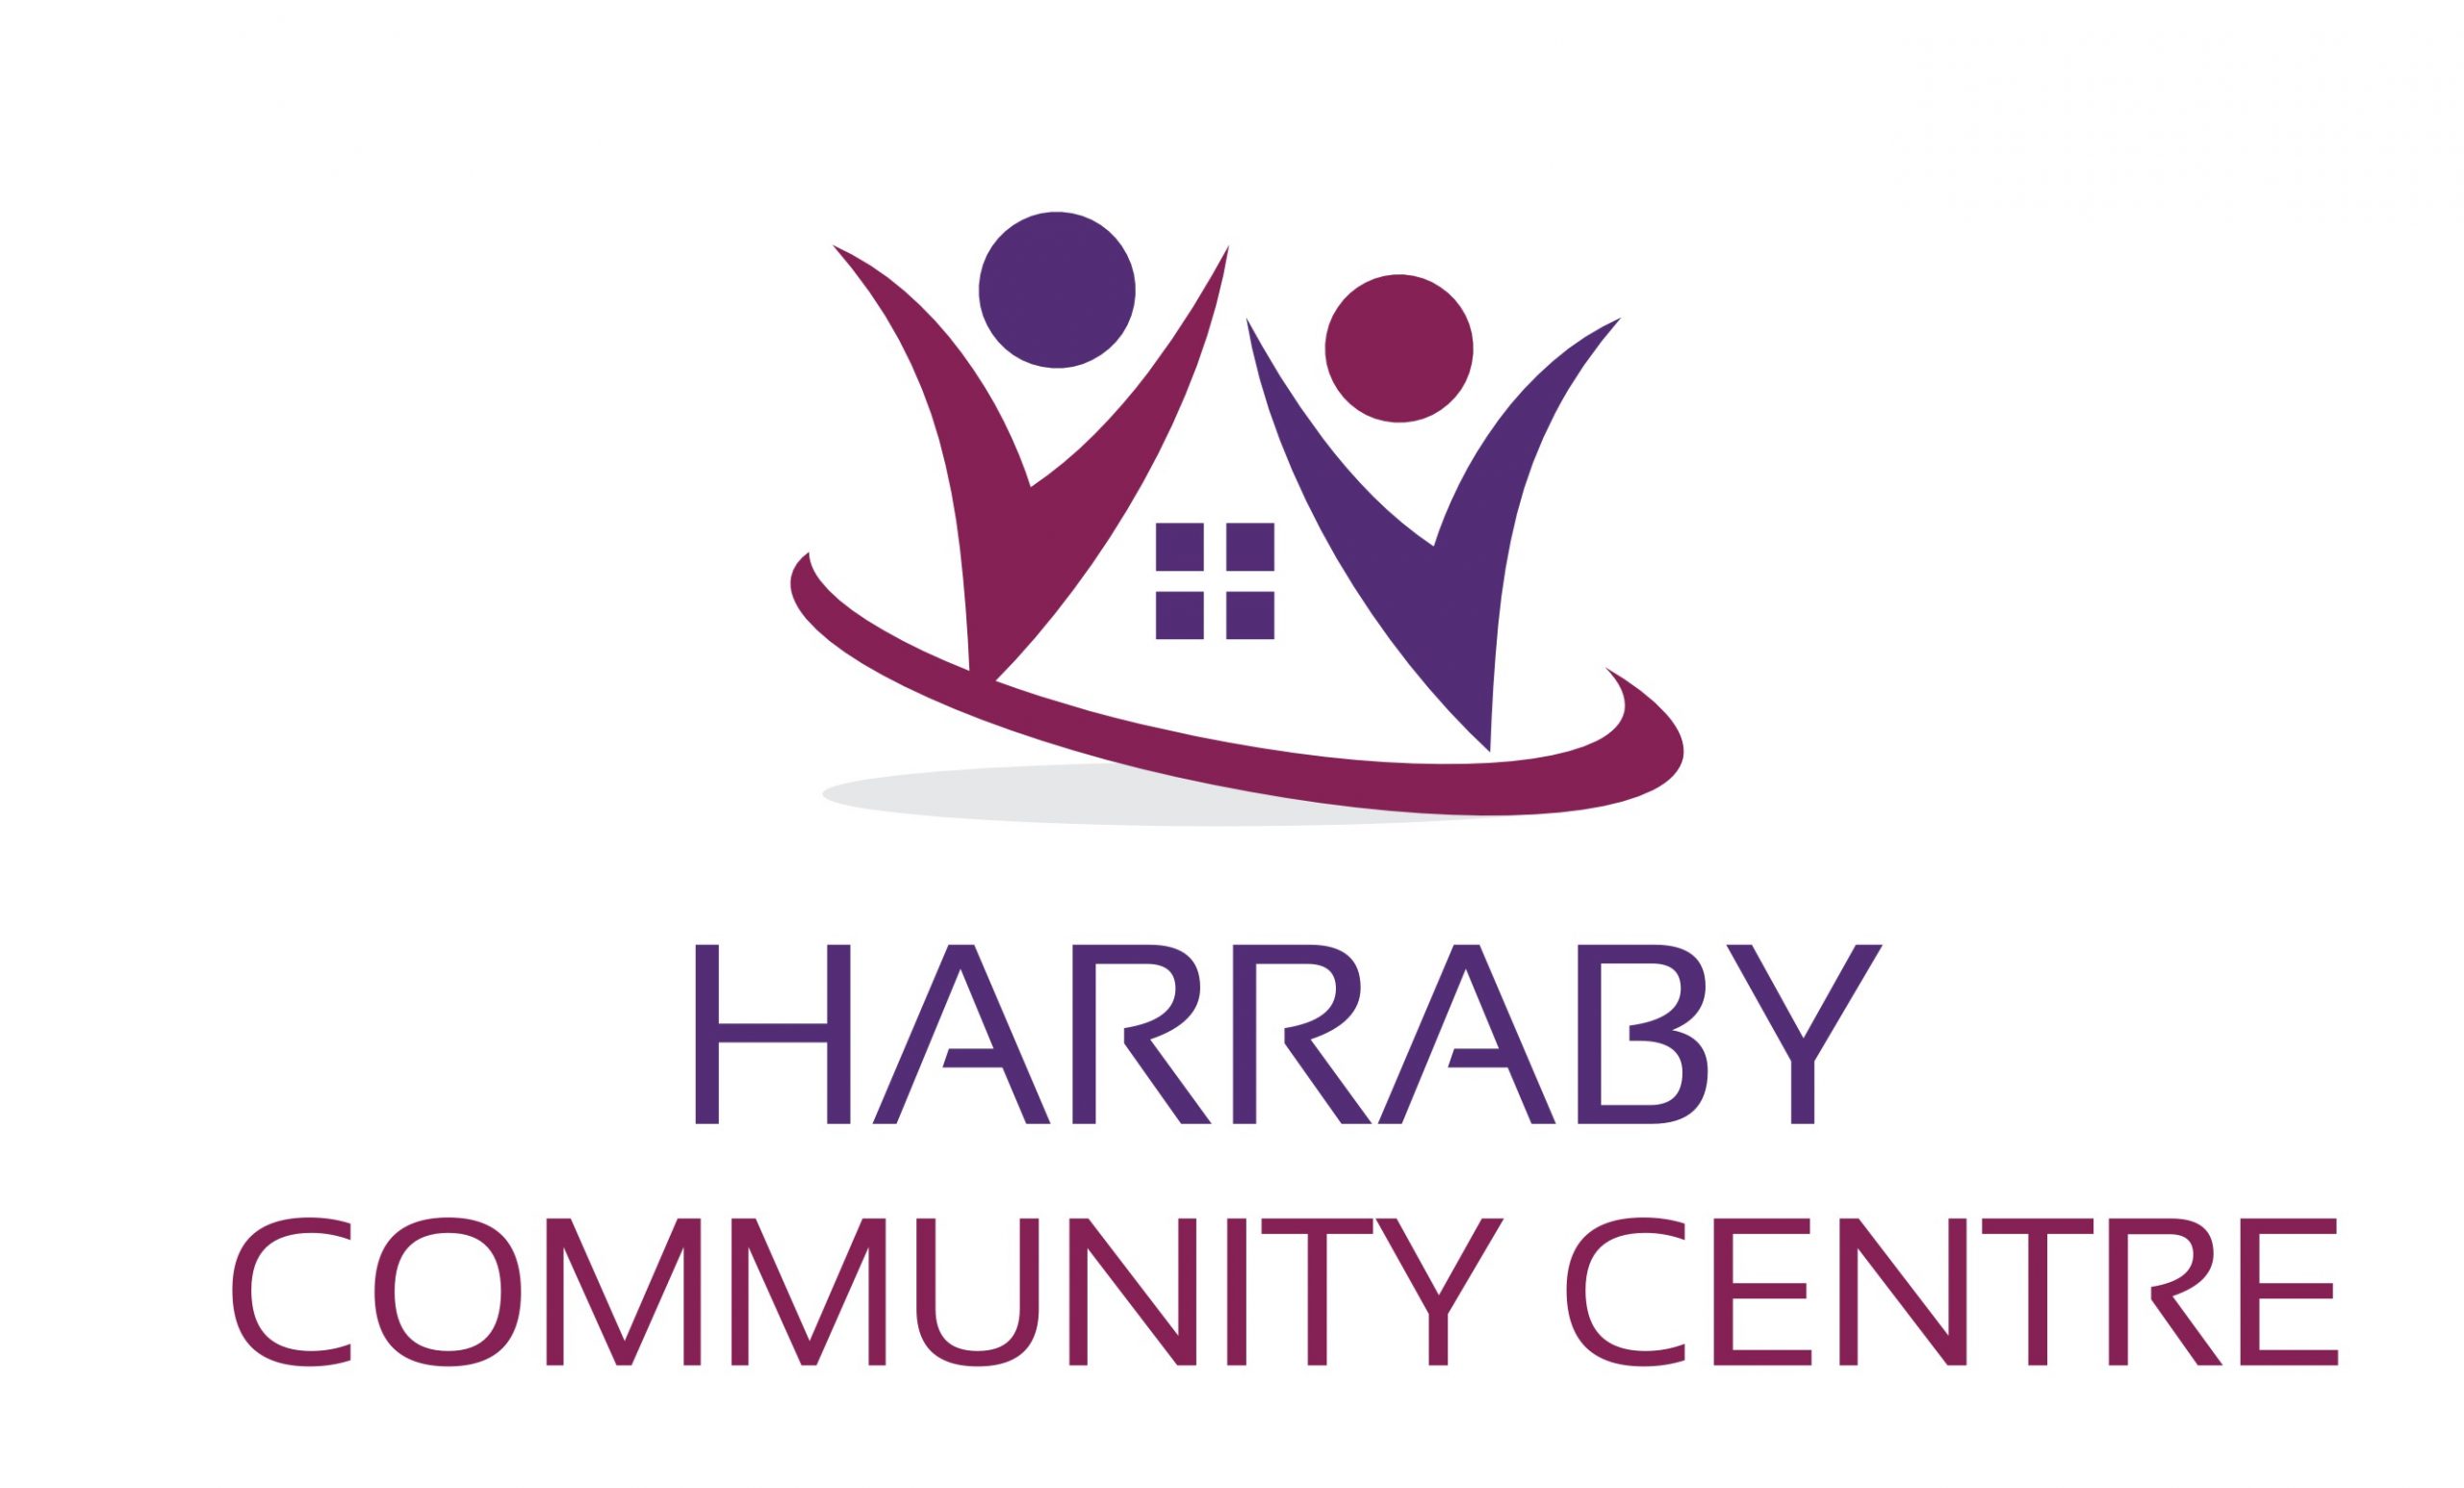 HARRABY COMMUNITY CENTRE